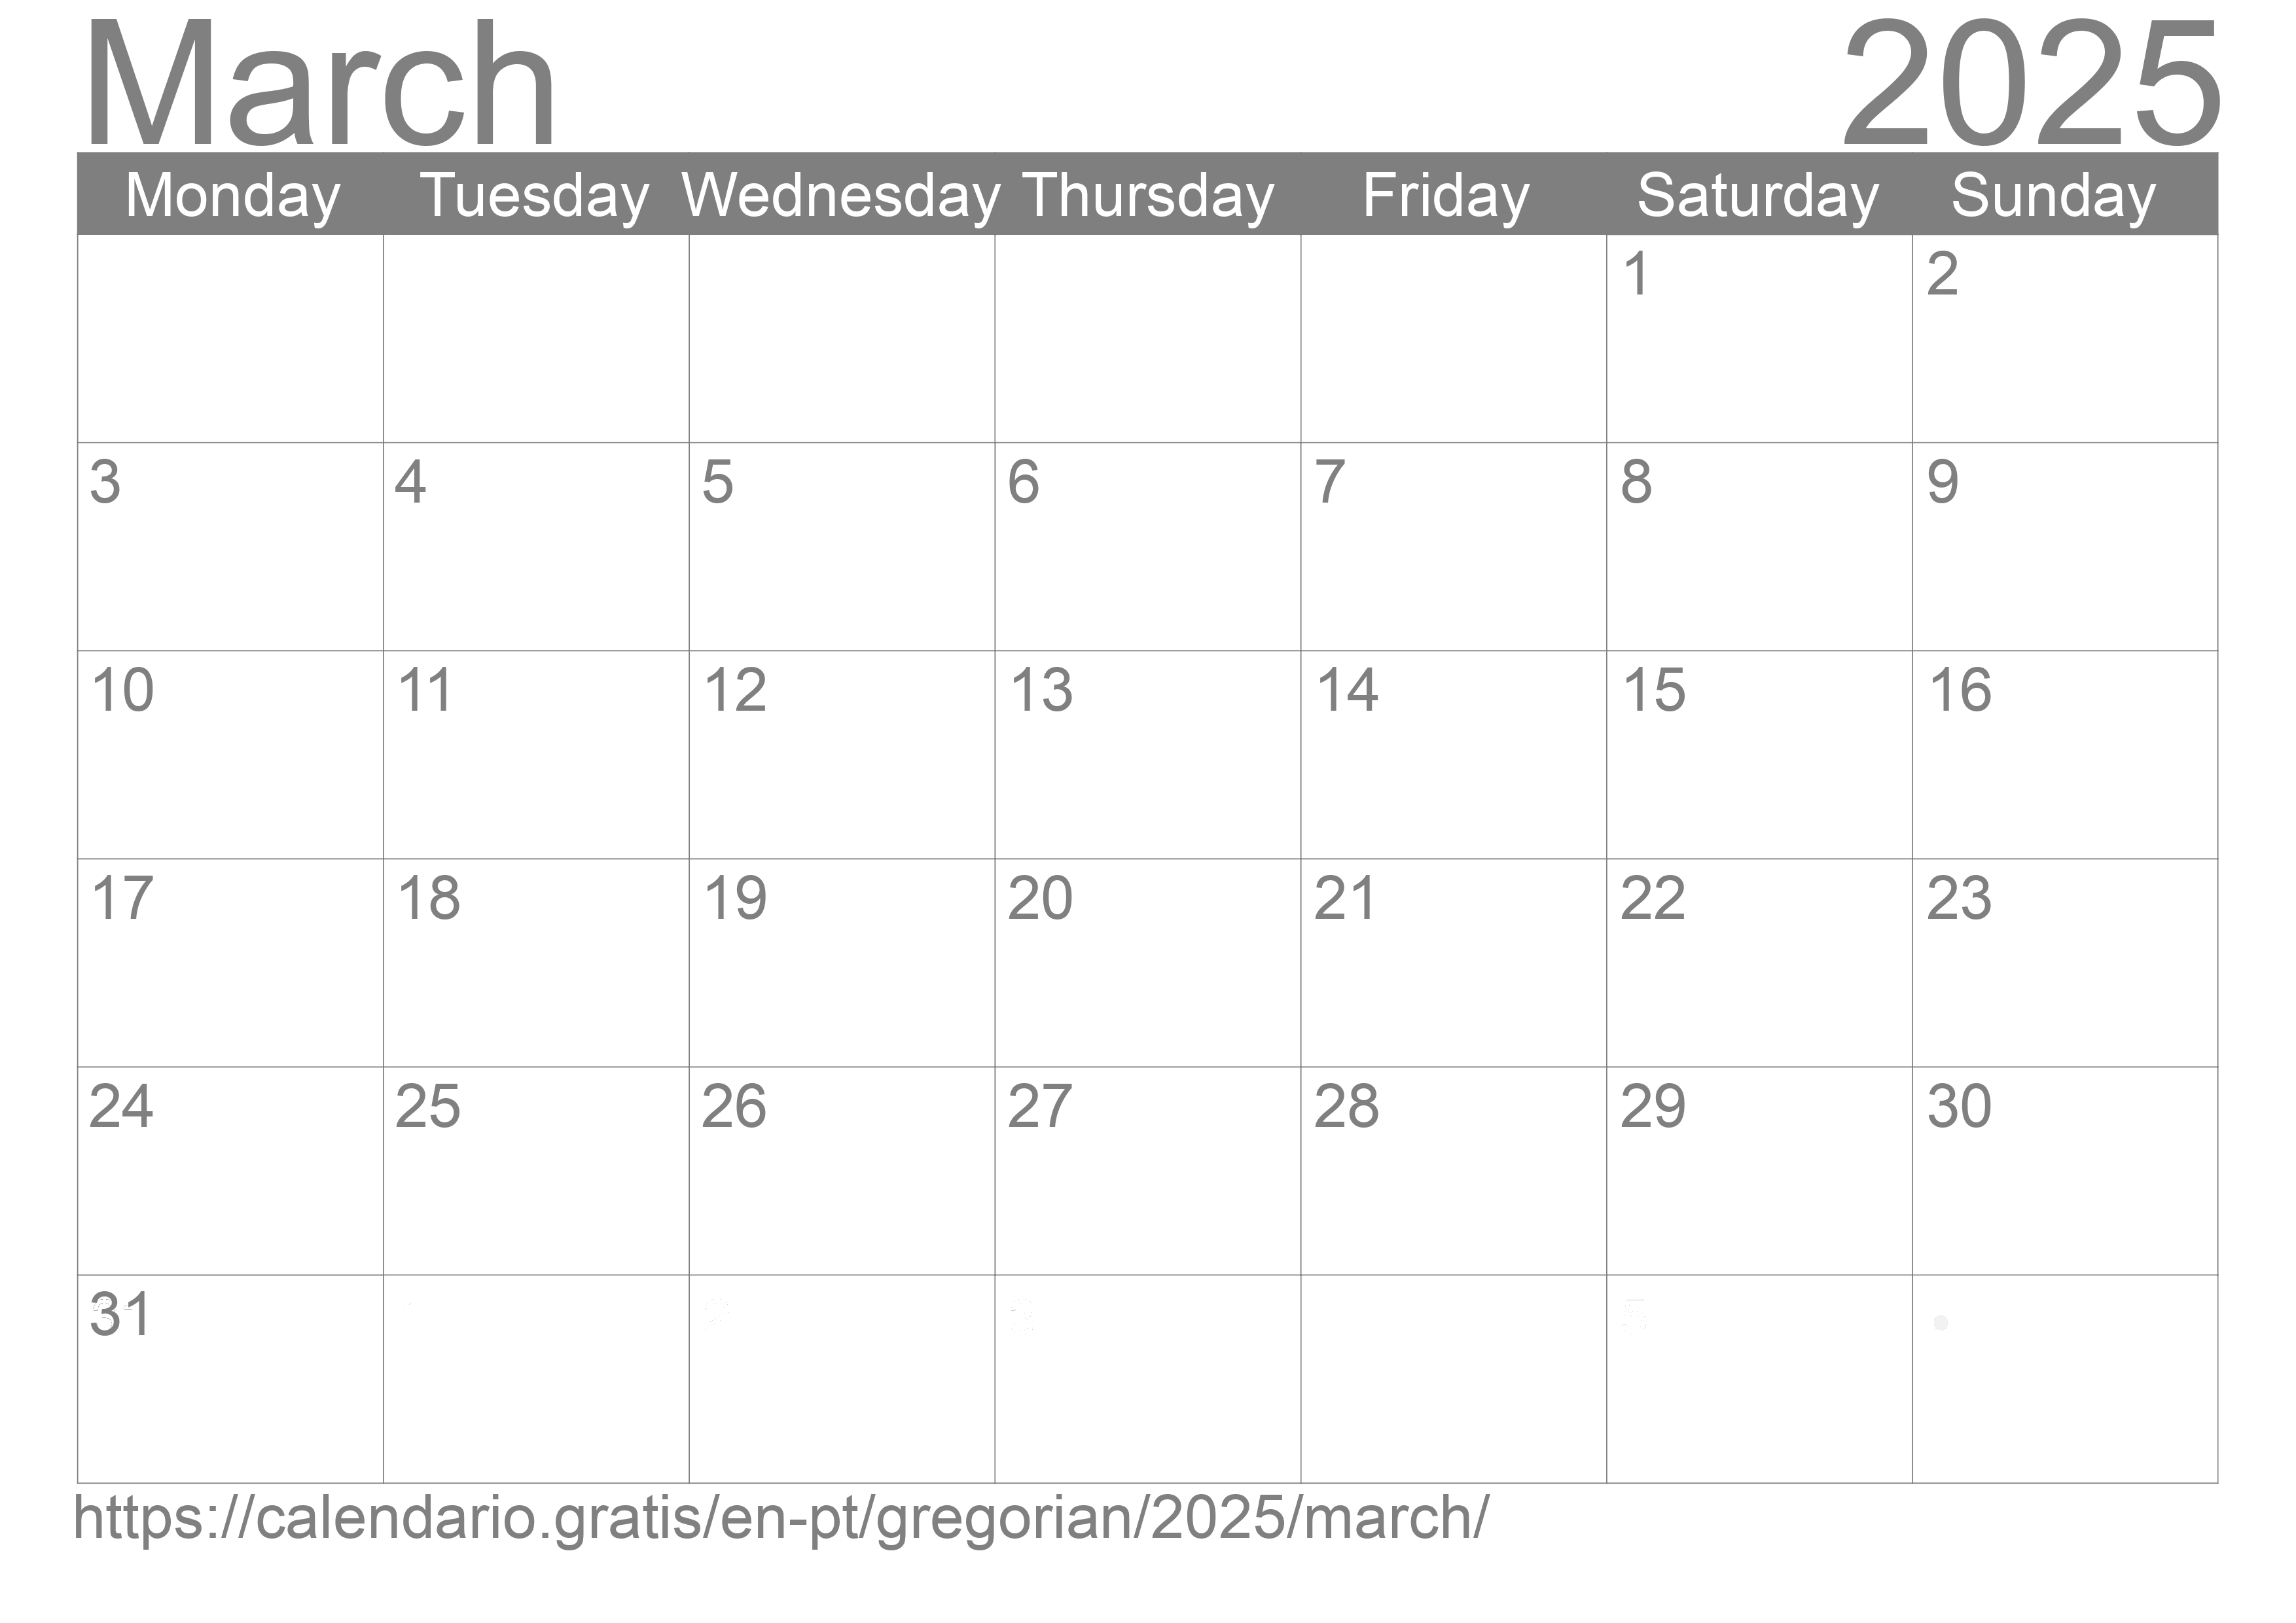 Calendar March 2025 to print